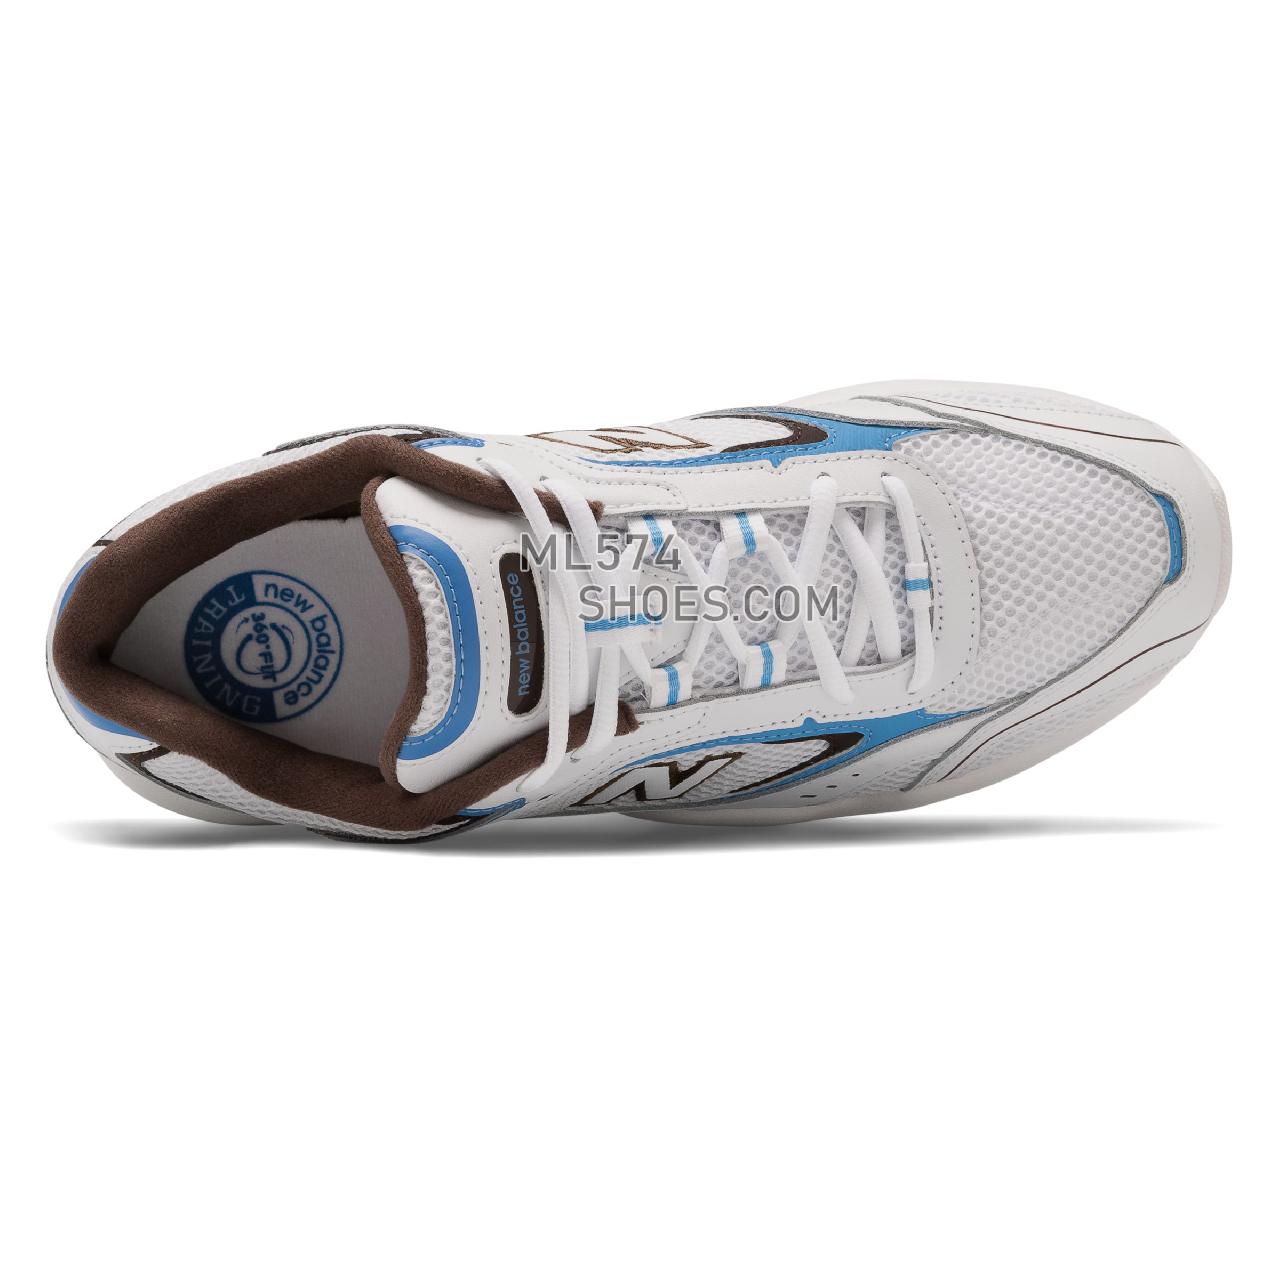 New Balance 452v1 - Unisex Men's Women's Classic Sneakers - White with Adrift and Blue - MX452SR